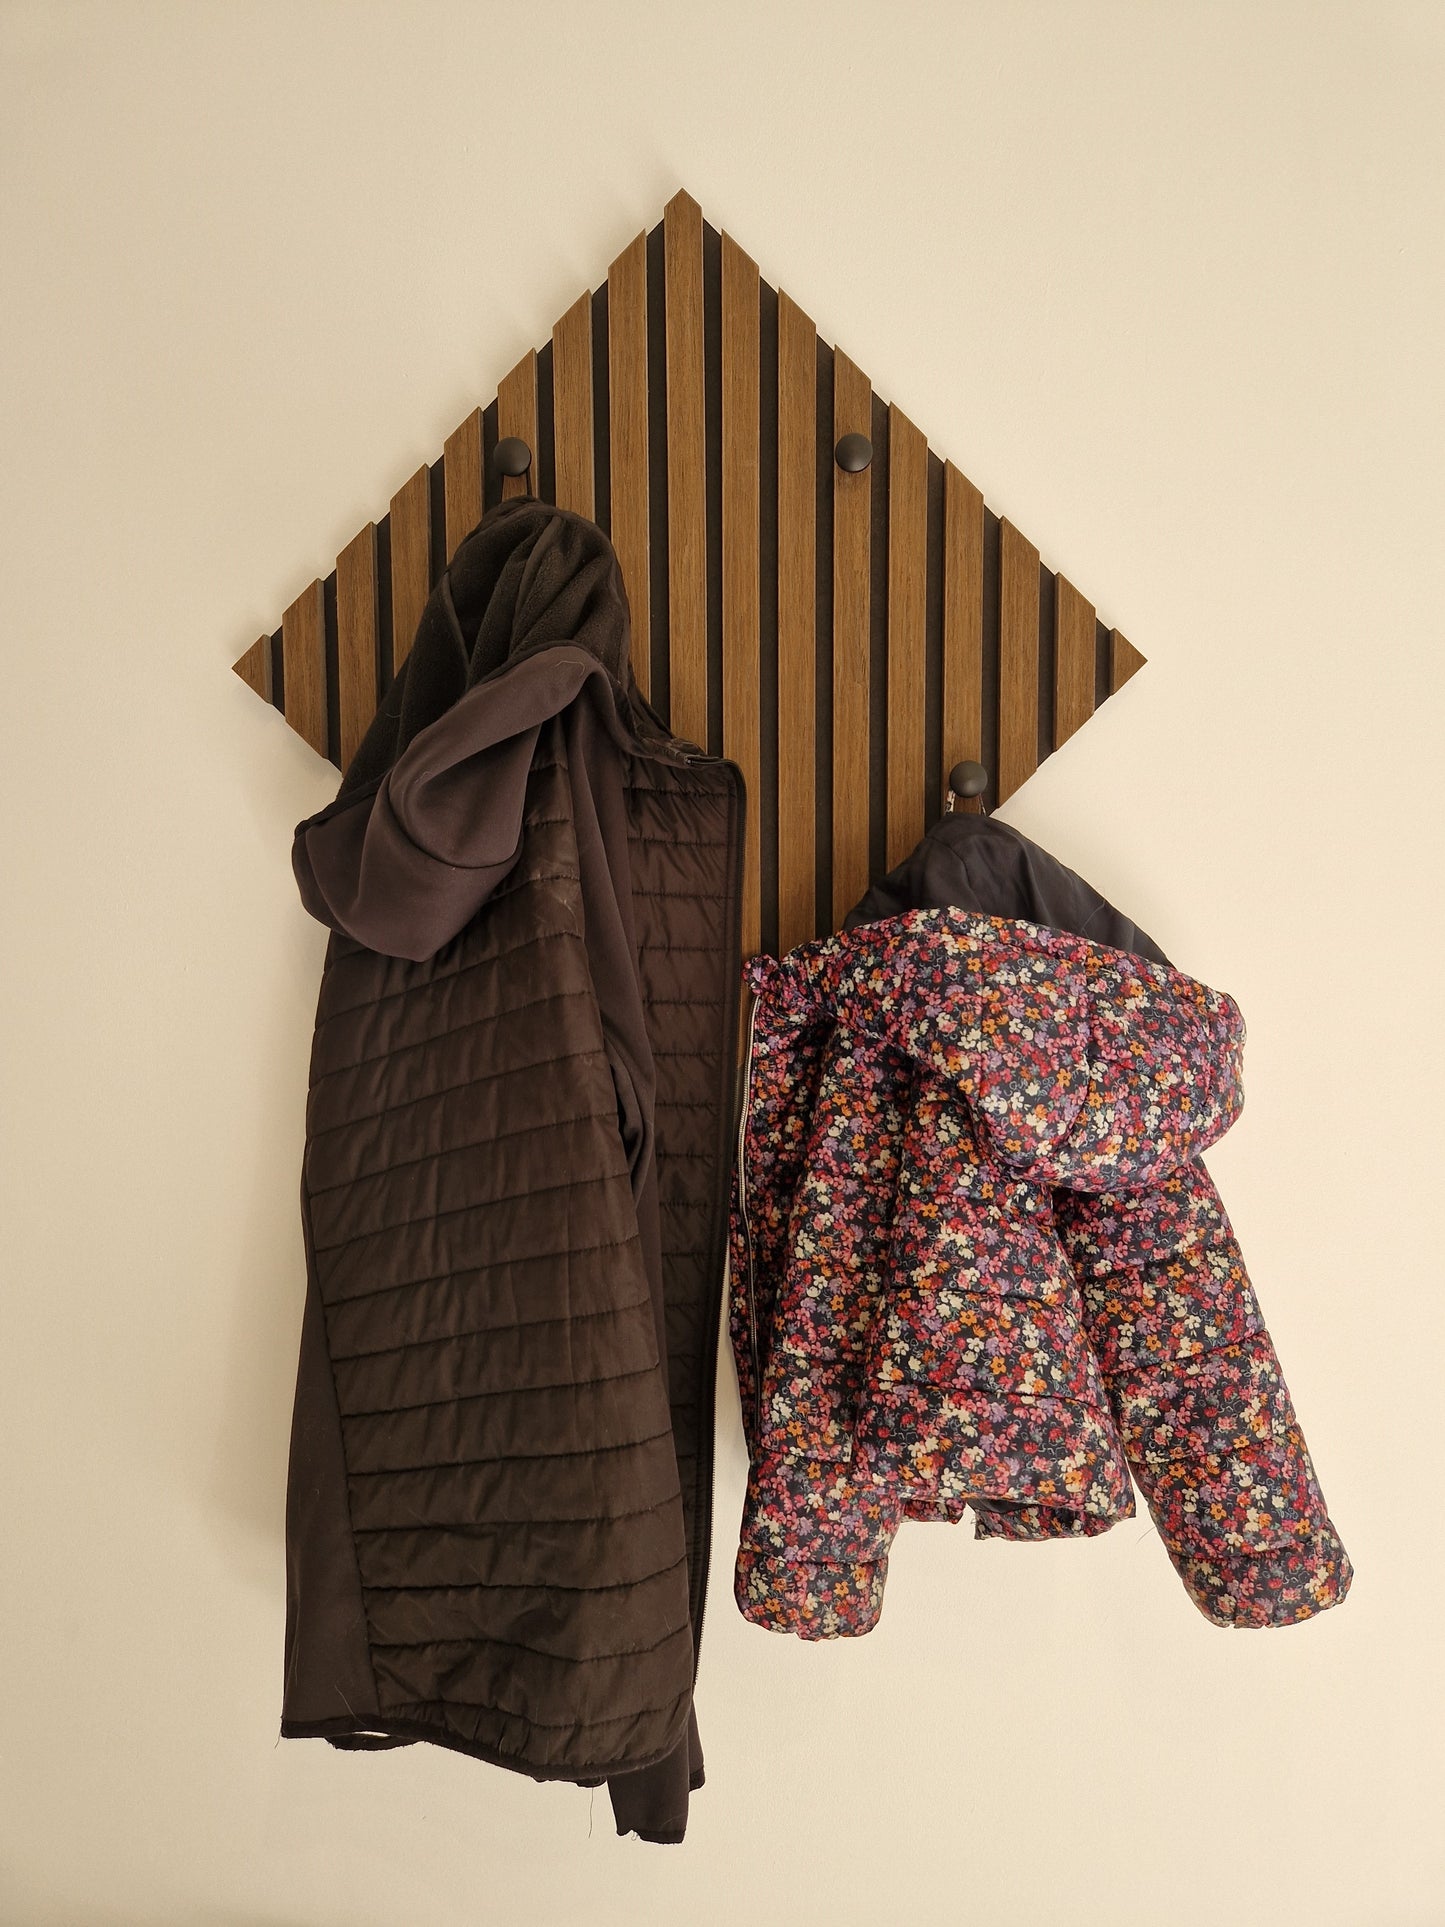 Acoustic coat rack